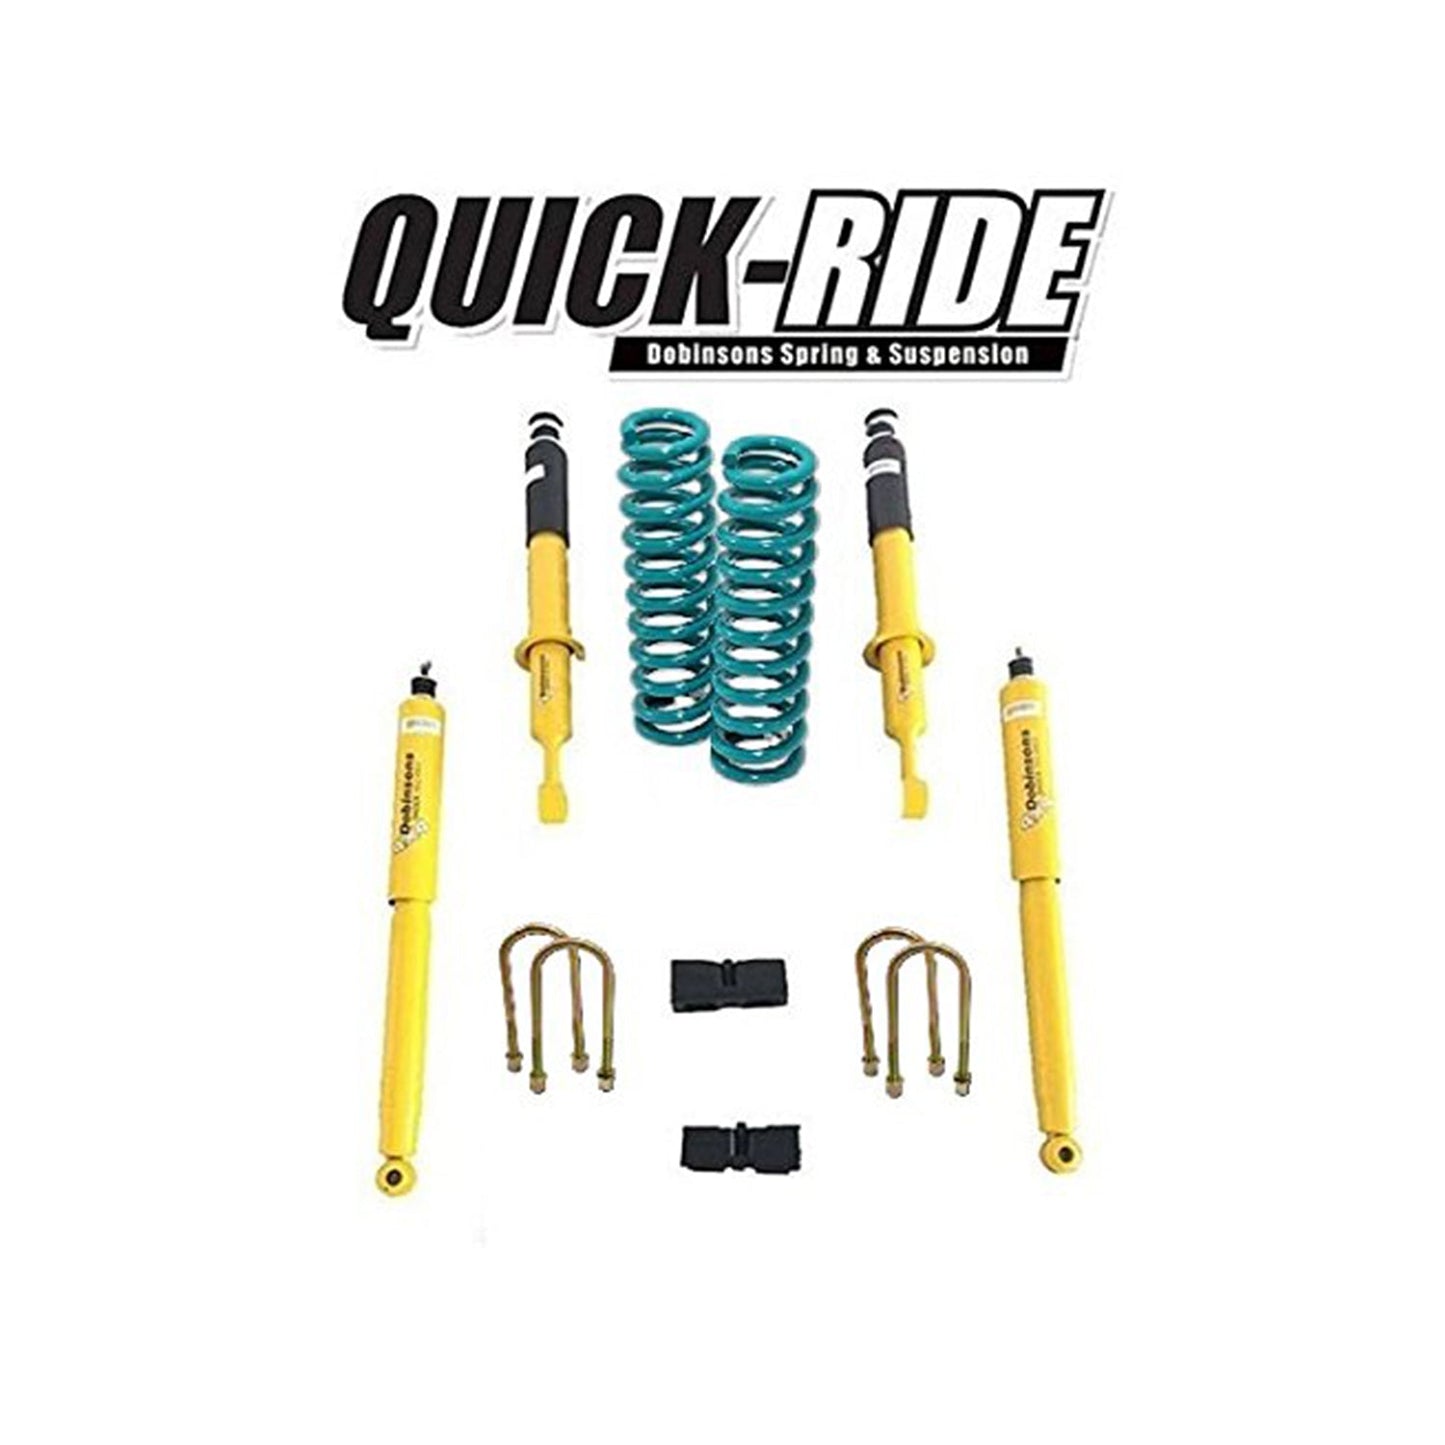 Dobinsons 2.0" Lift Kit Toyota Tacoma 2005-2015 with Quick Ride Rear